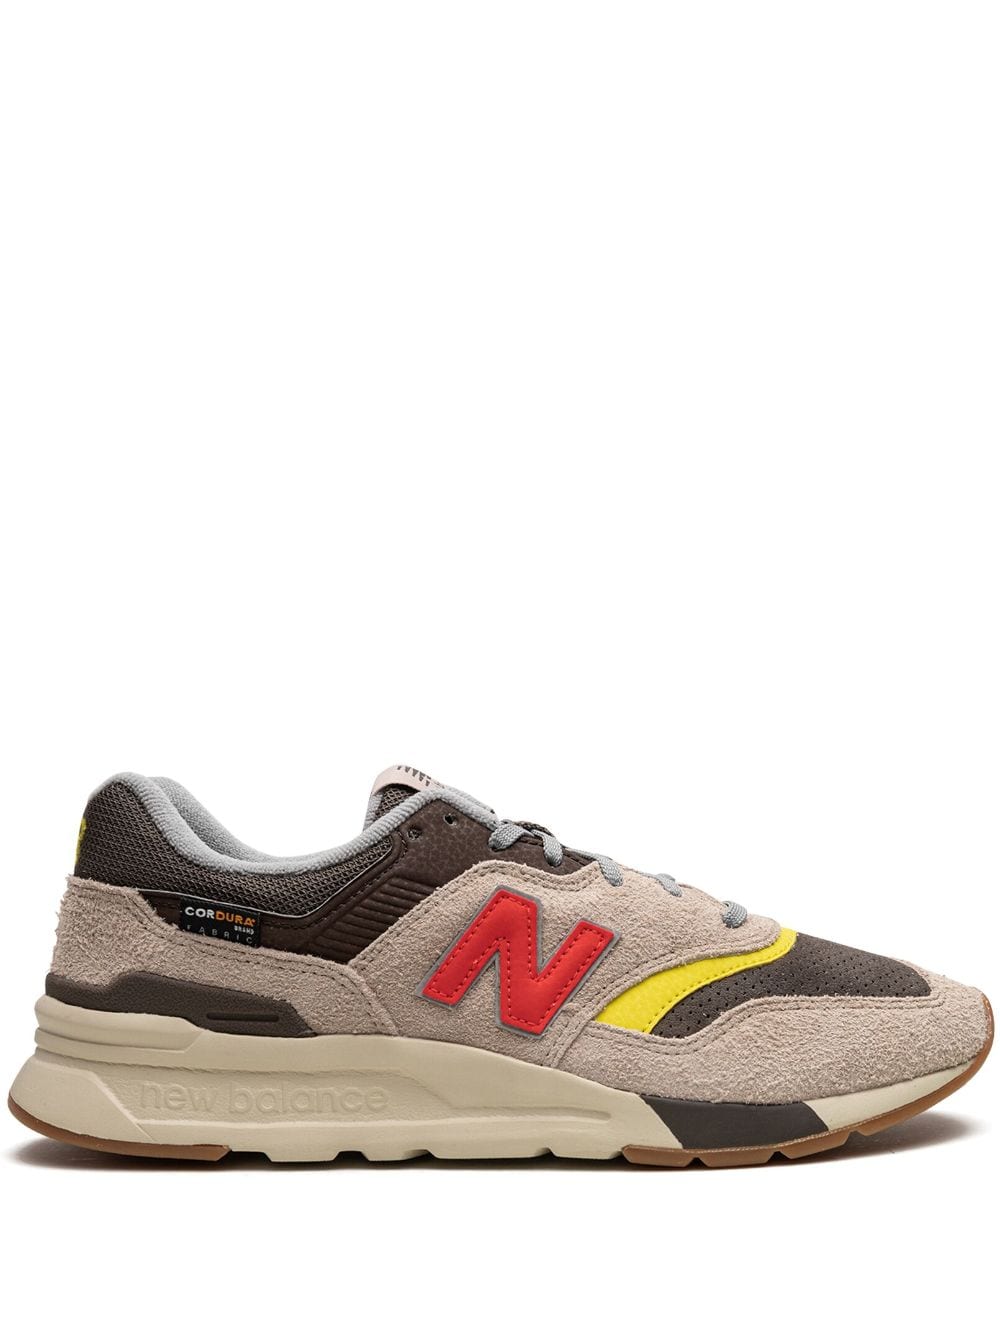 New Balance "997 ""Cordura"" sneakers" - Bruin